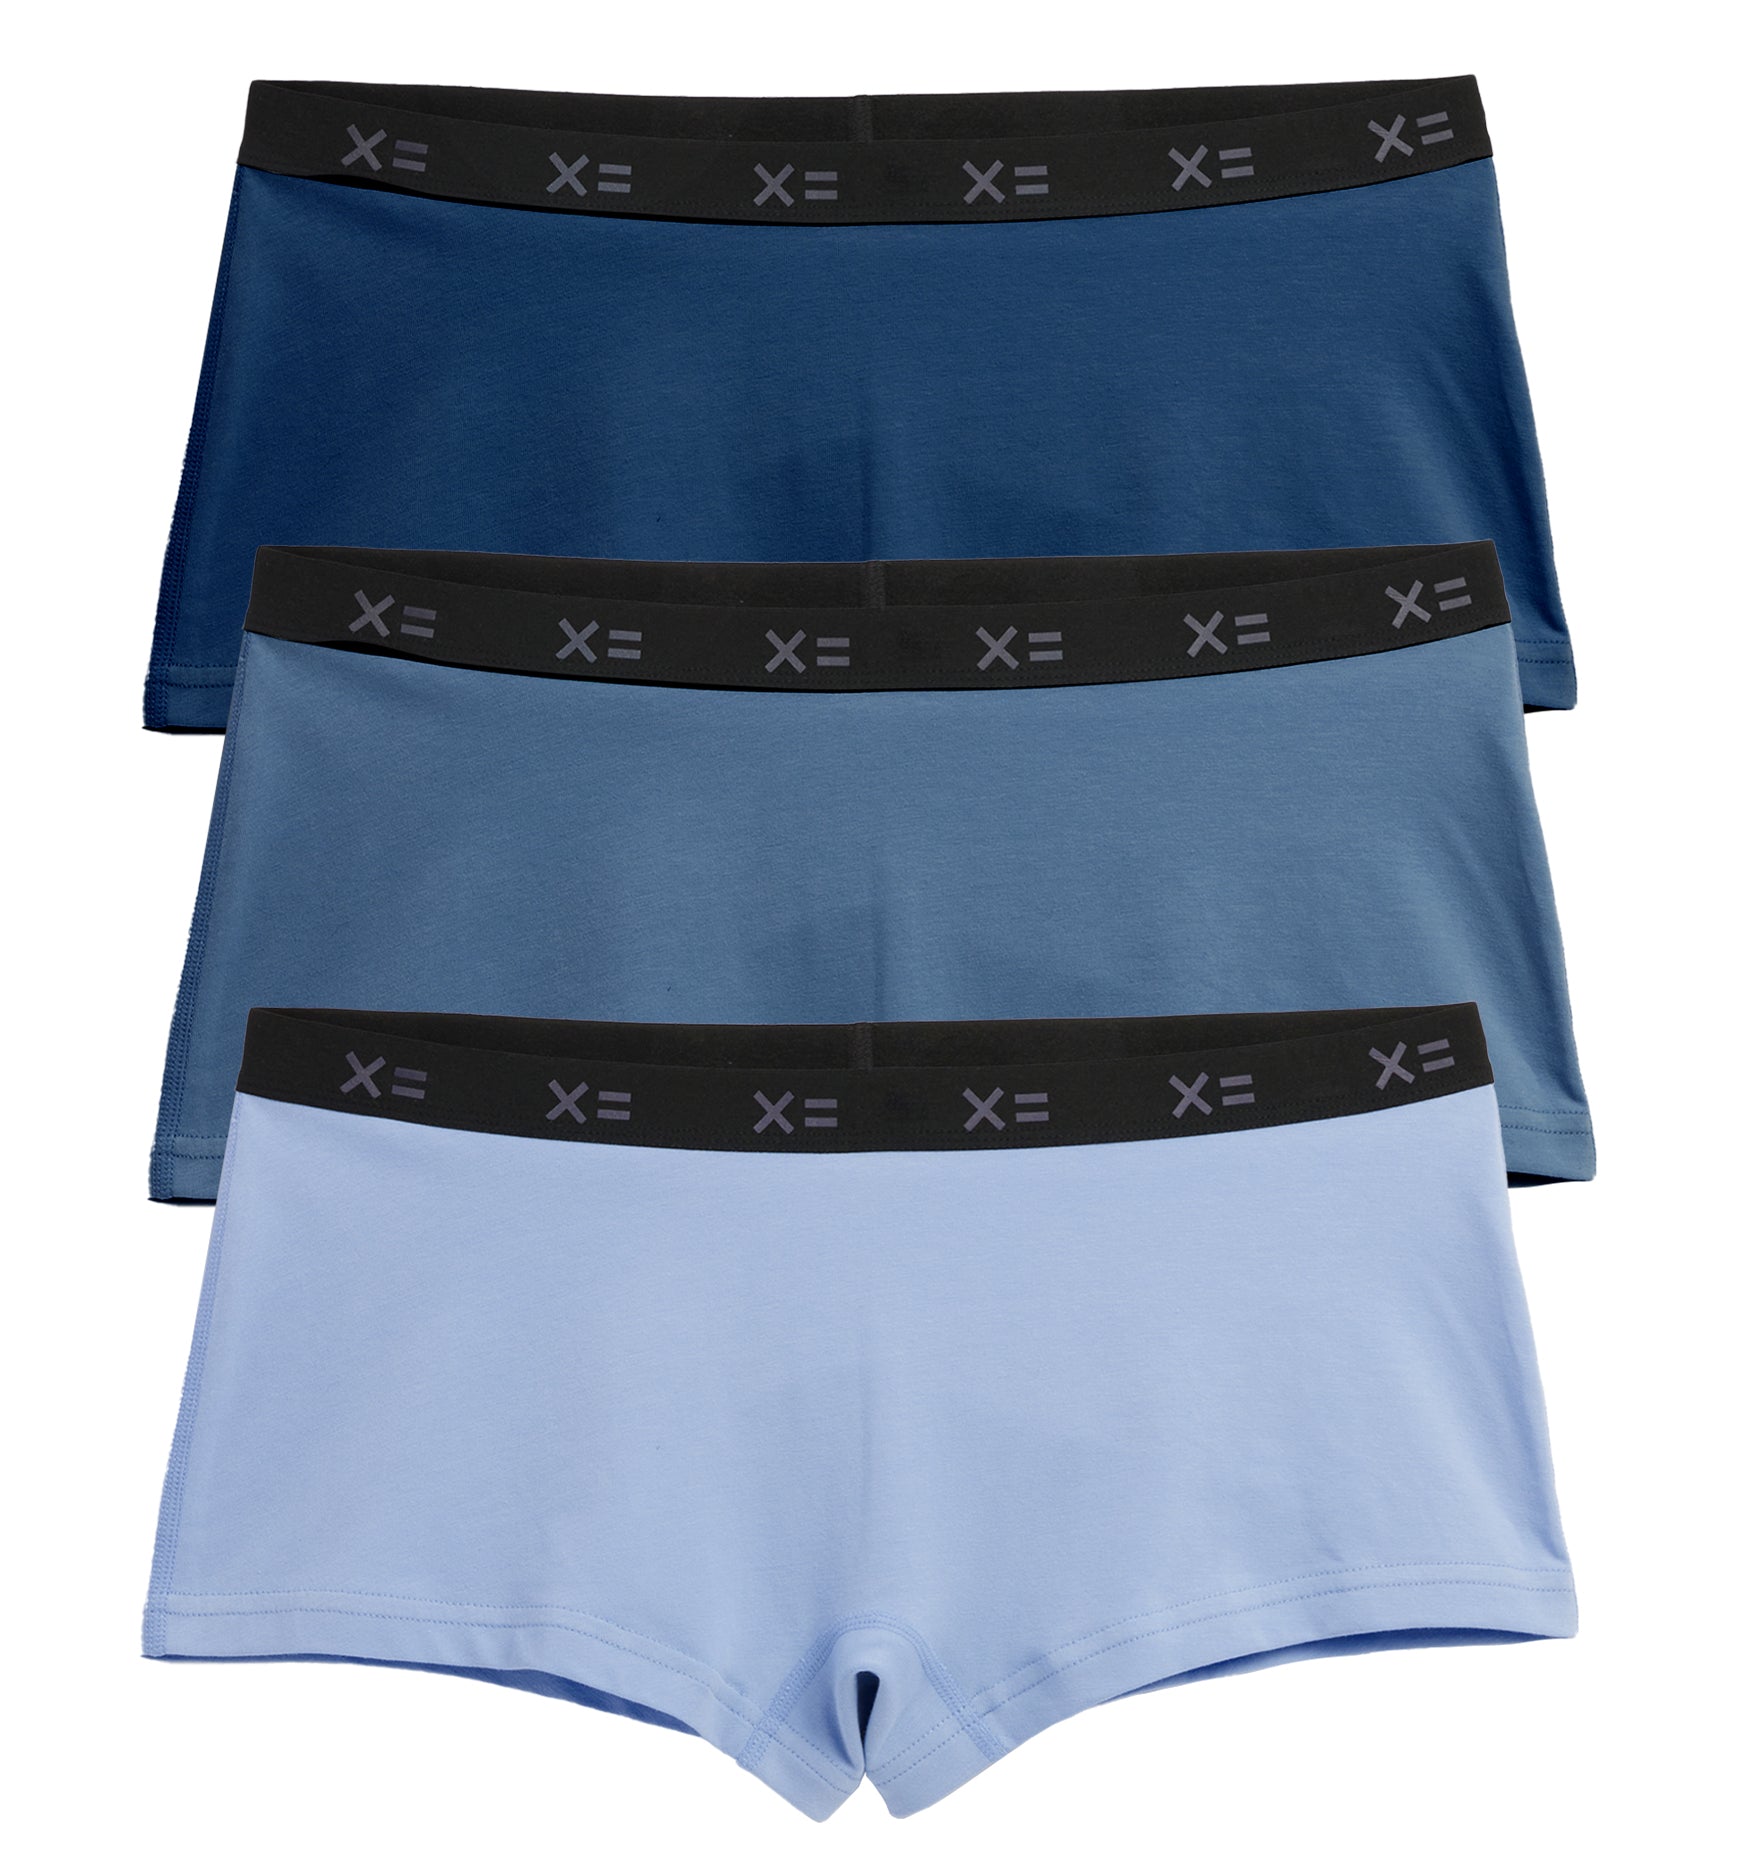 TomboyX First Line Period Leakproof Boy Shorts Underwear, Cotton Stretch  Comfort (3XS-6X) Sugar Violet X Large